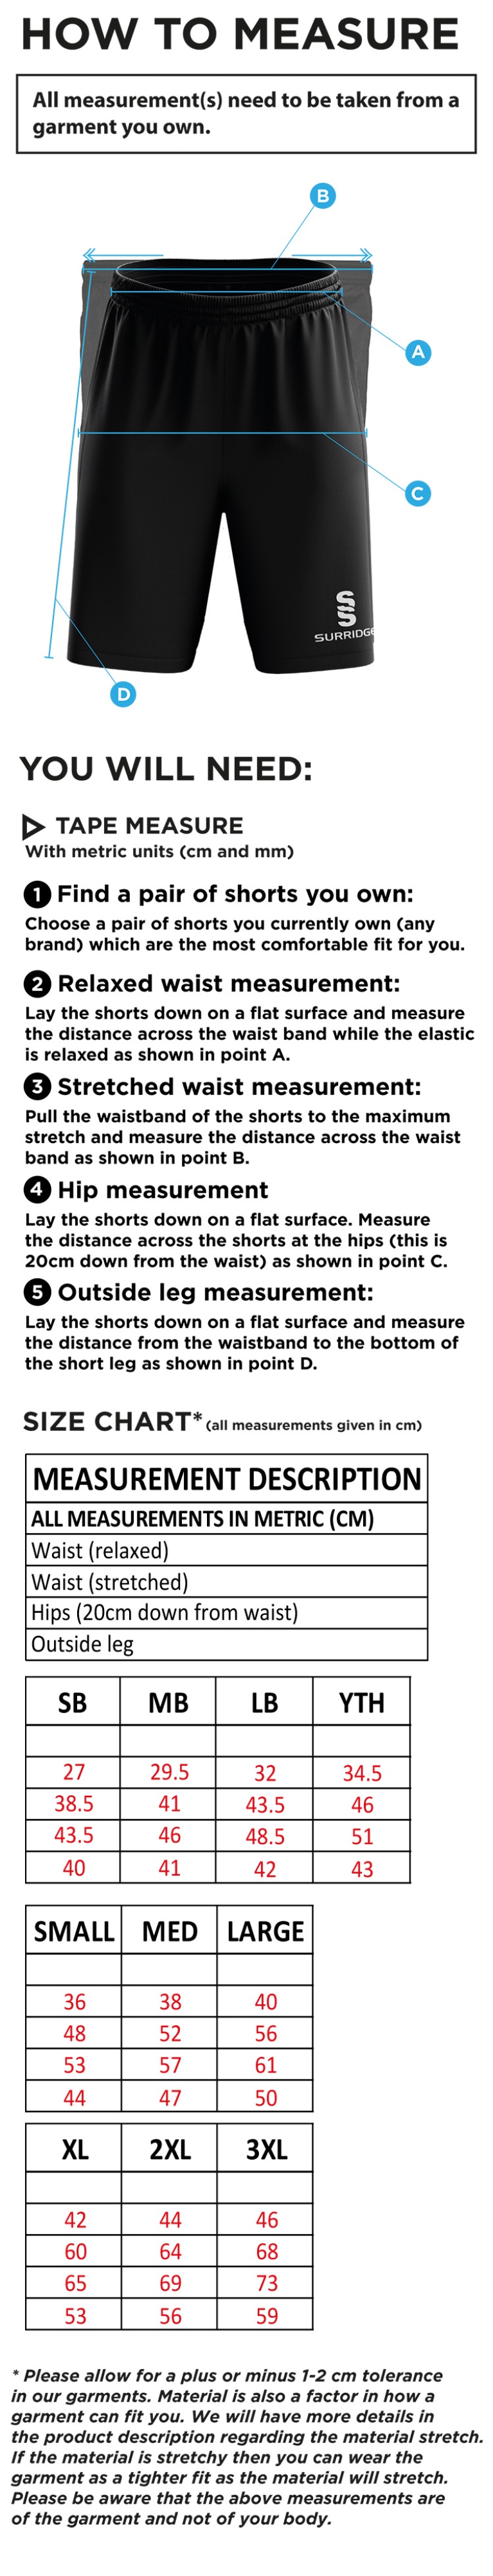 Nailsea CC - Blade Short - Size Guide